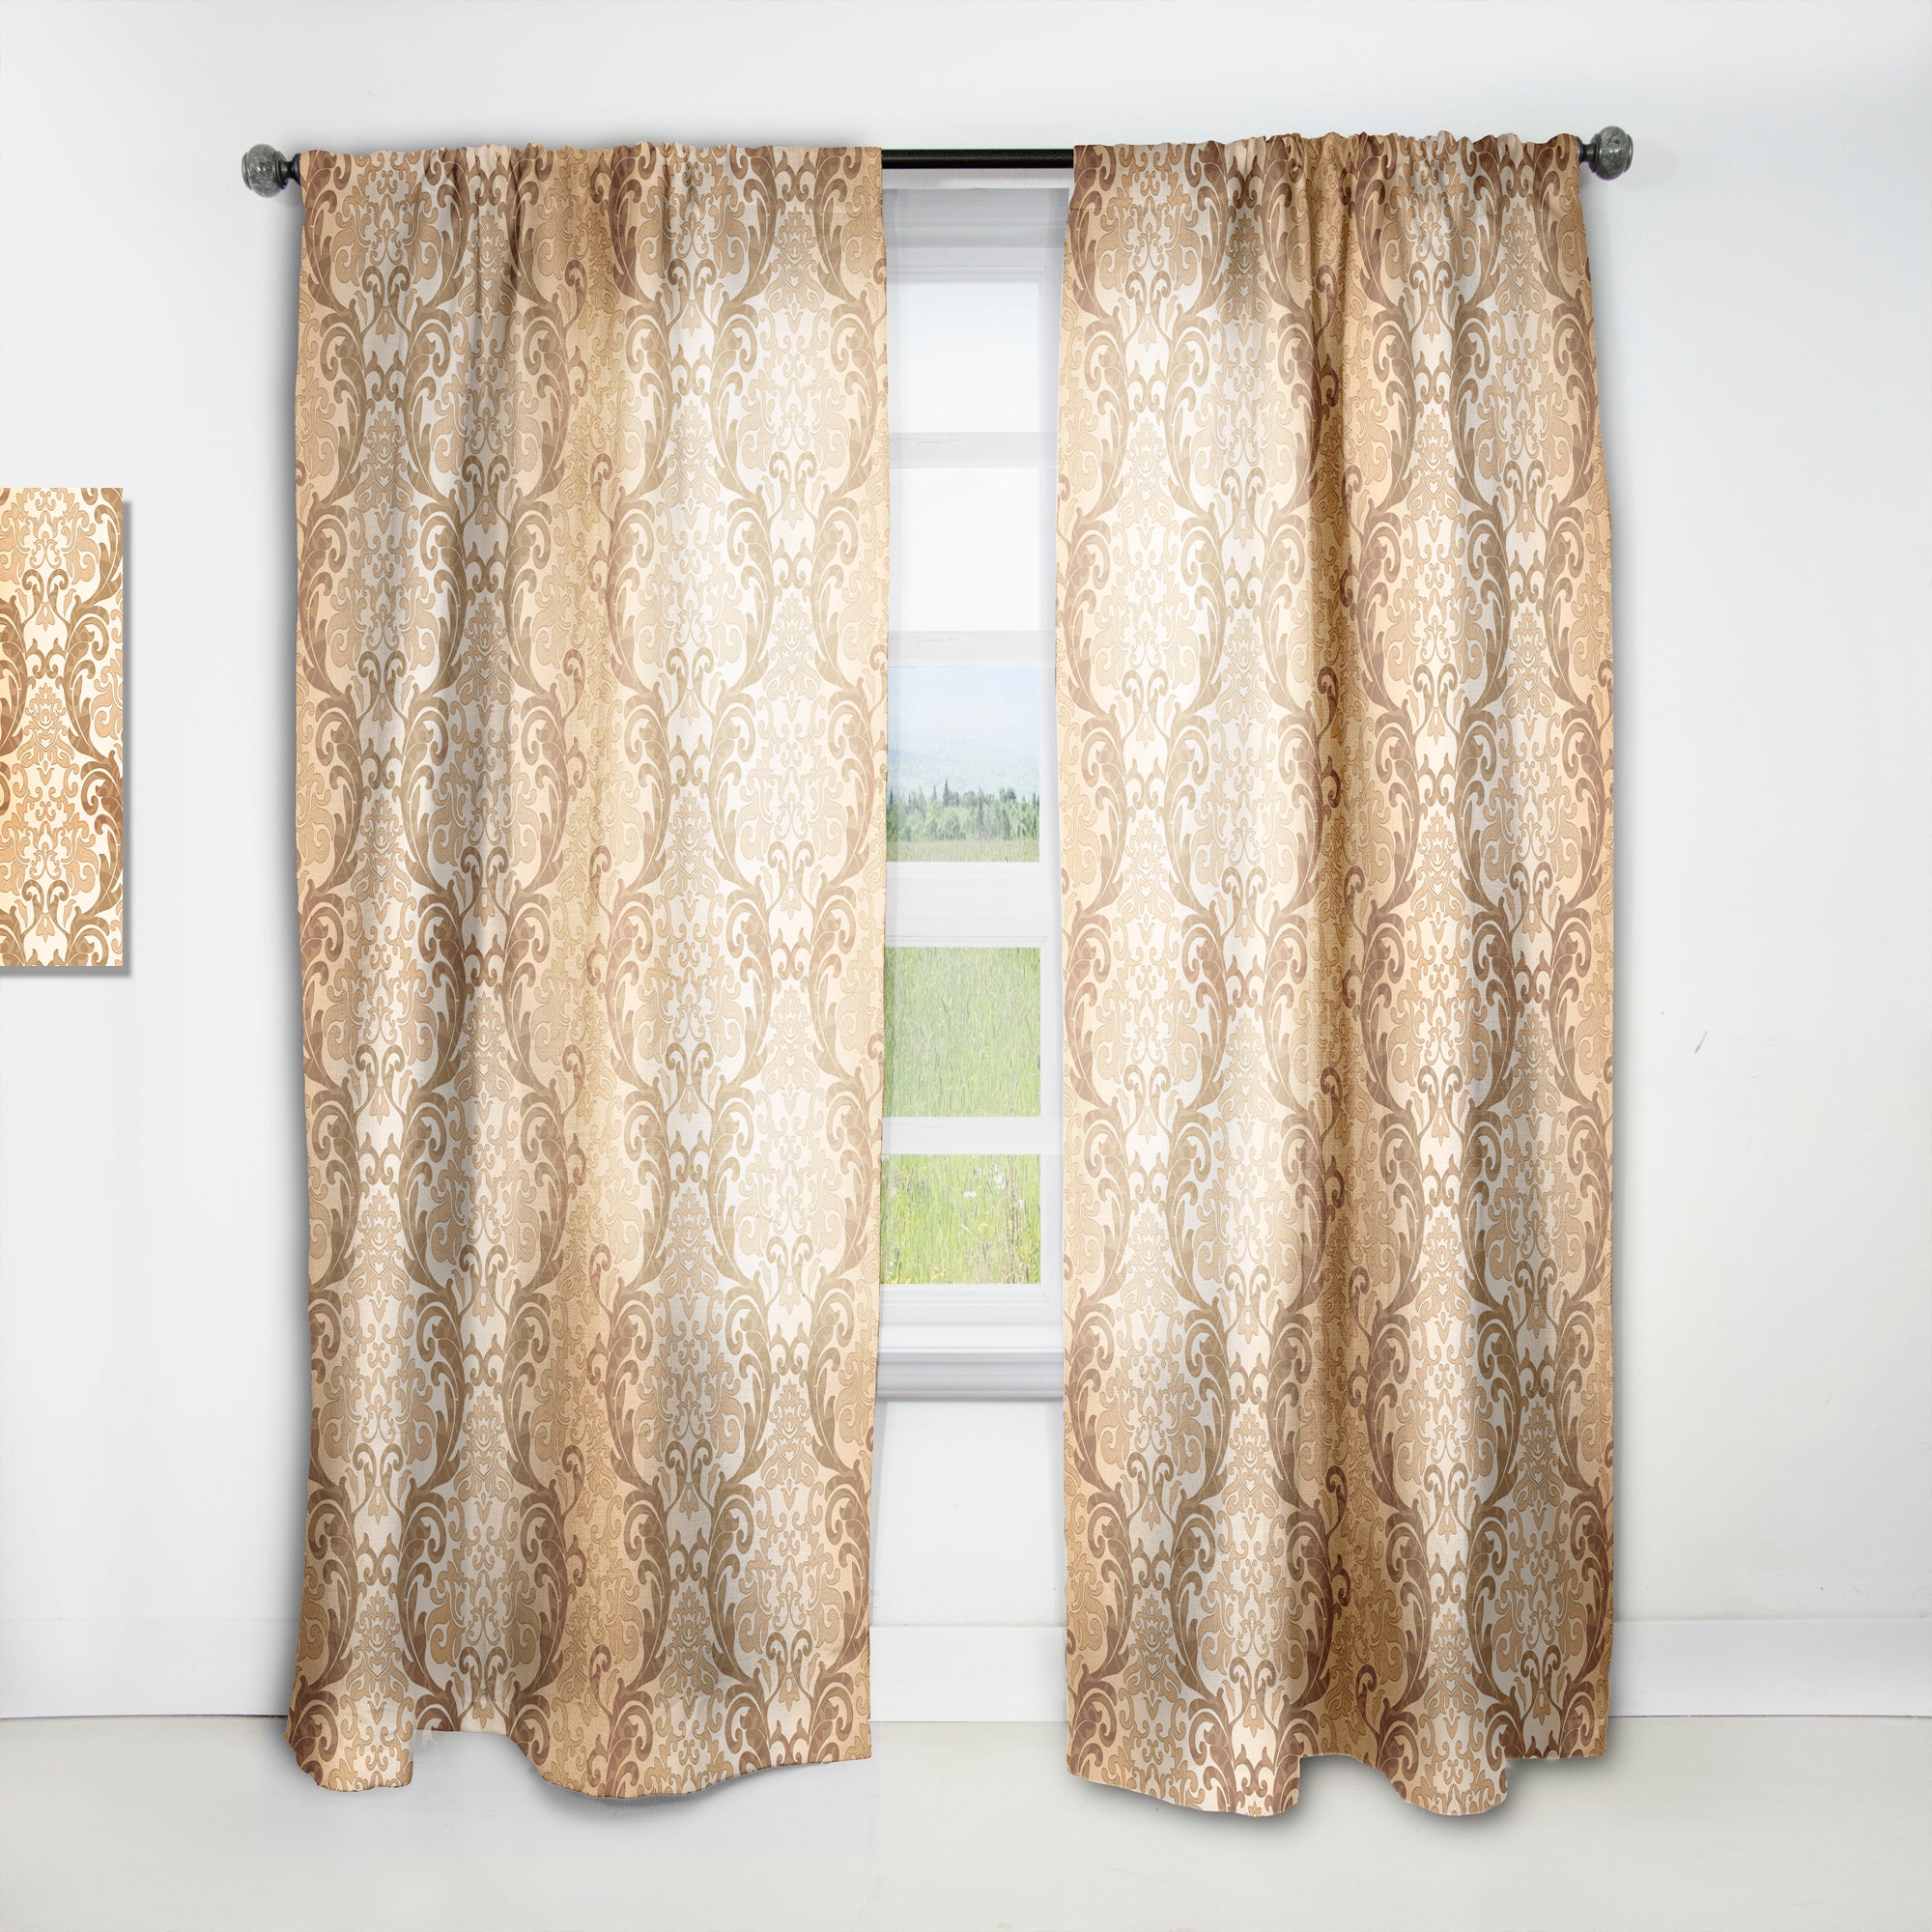 Designart 'Damask pattern' Mid-Century Modern Curtain Panel